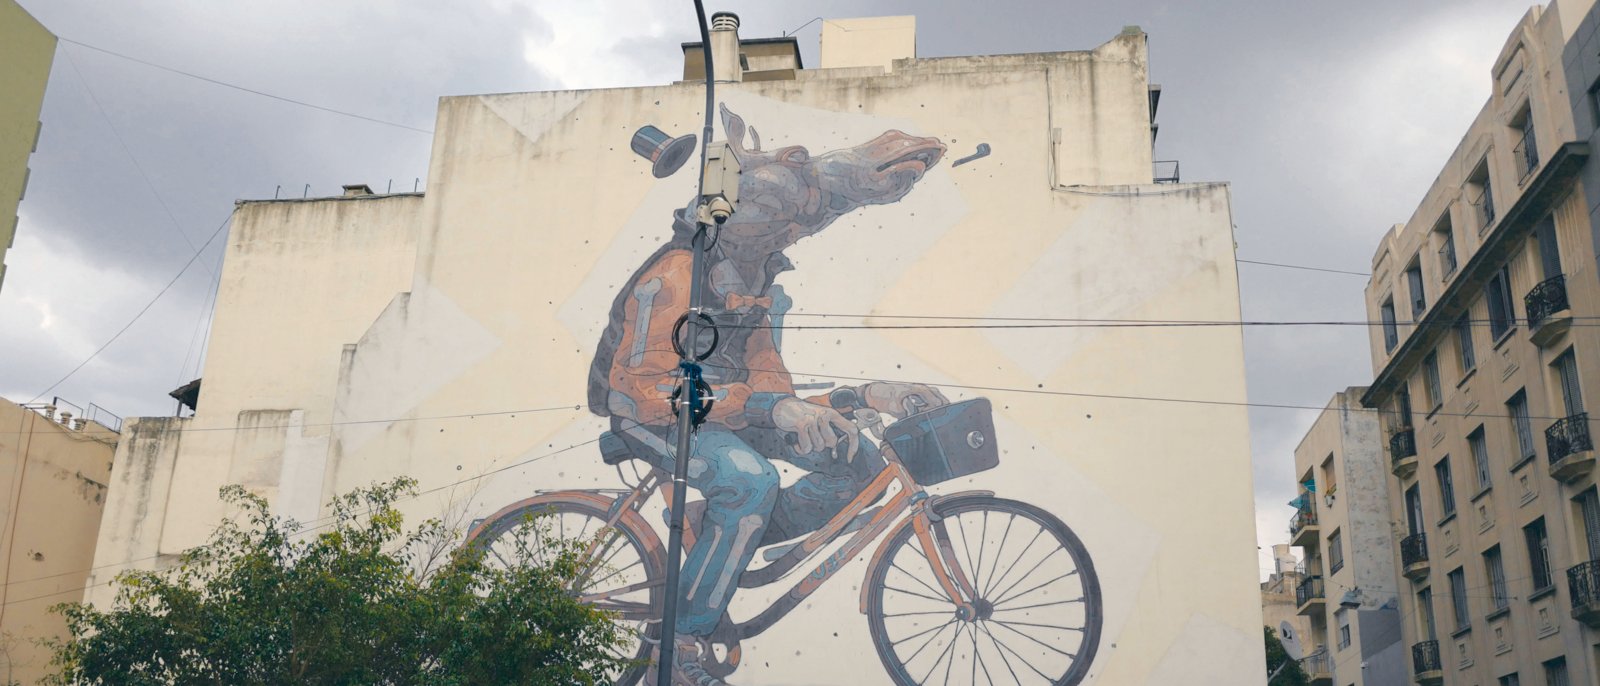 Street art in Argentina